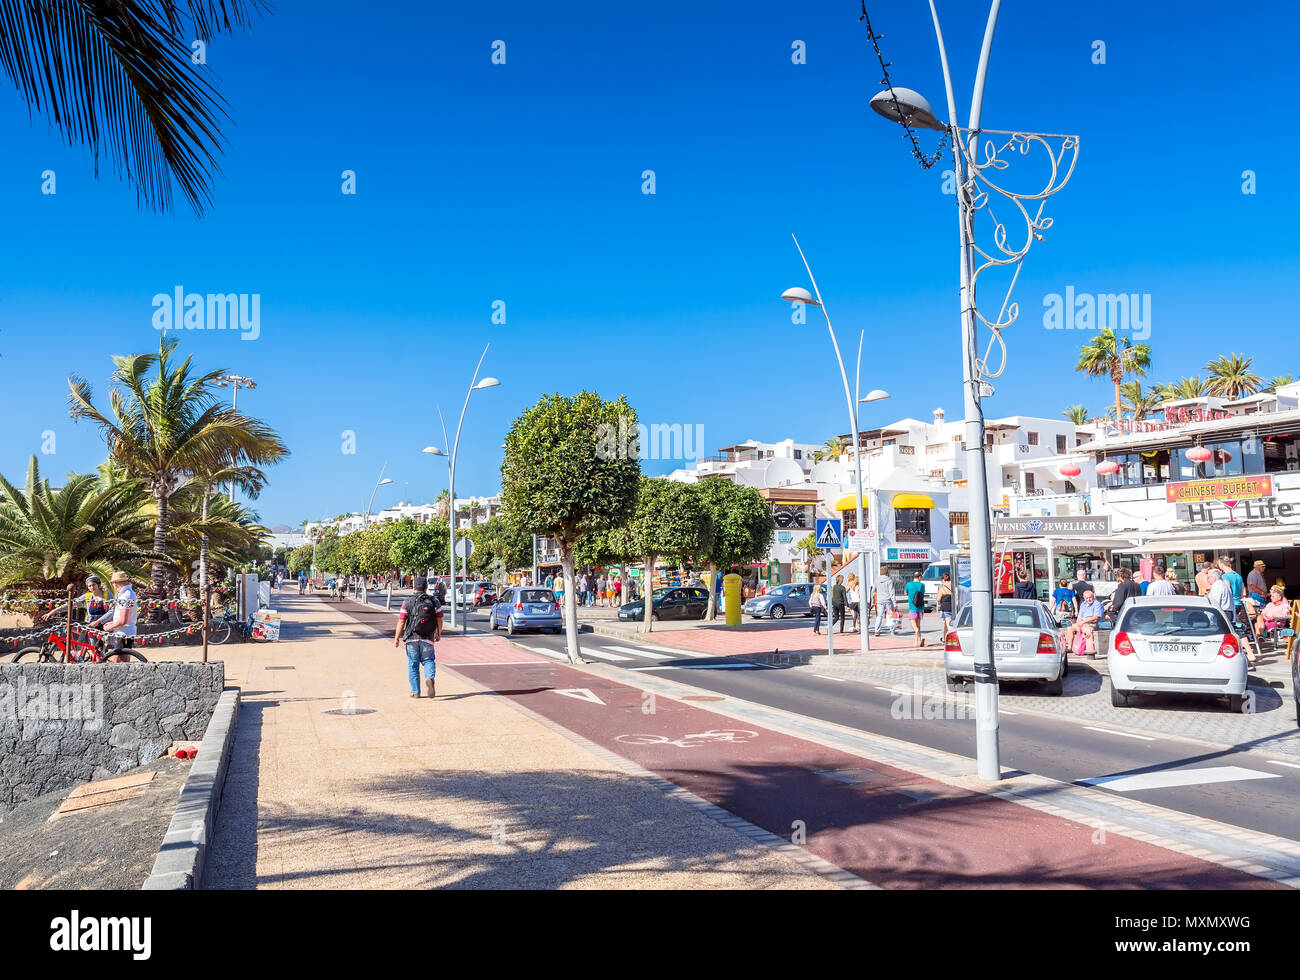 Puerto del Carmen, Spanien - 24. Dezember 2016: die Avenida de las Playas street view mit Touristen in Puerto del Carmen, Spanien. Avenida de las Playas ist 7. Stockfoto